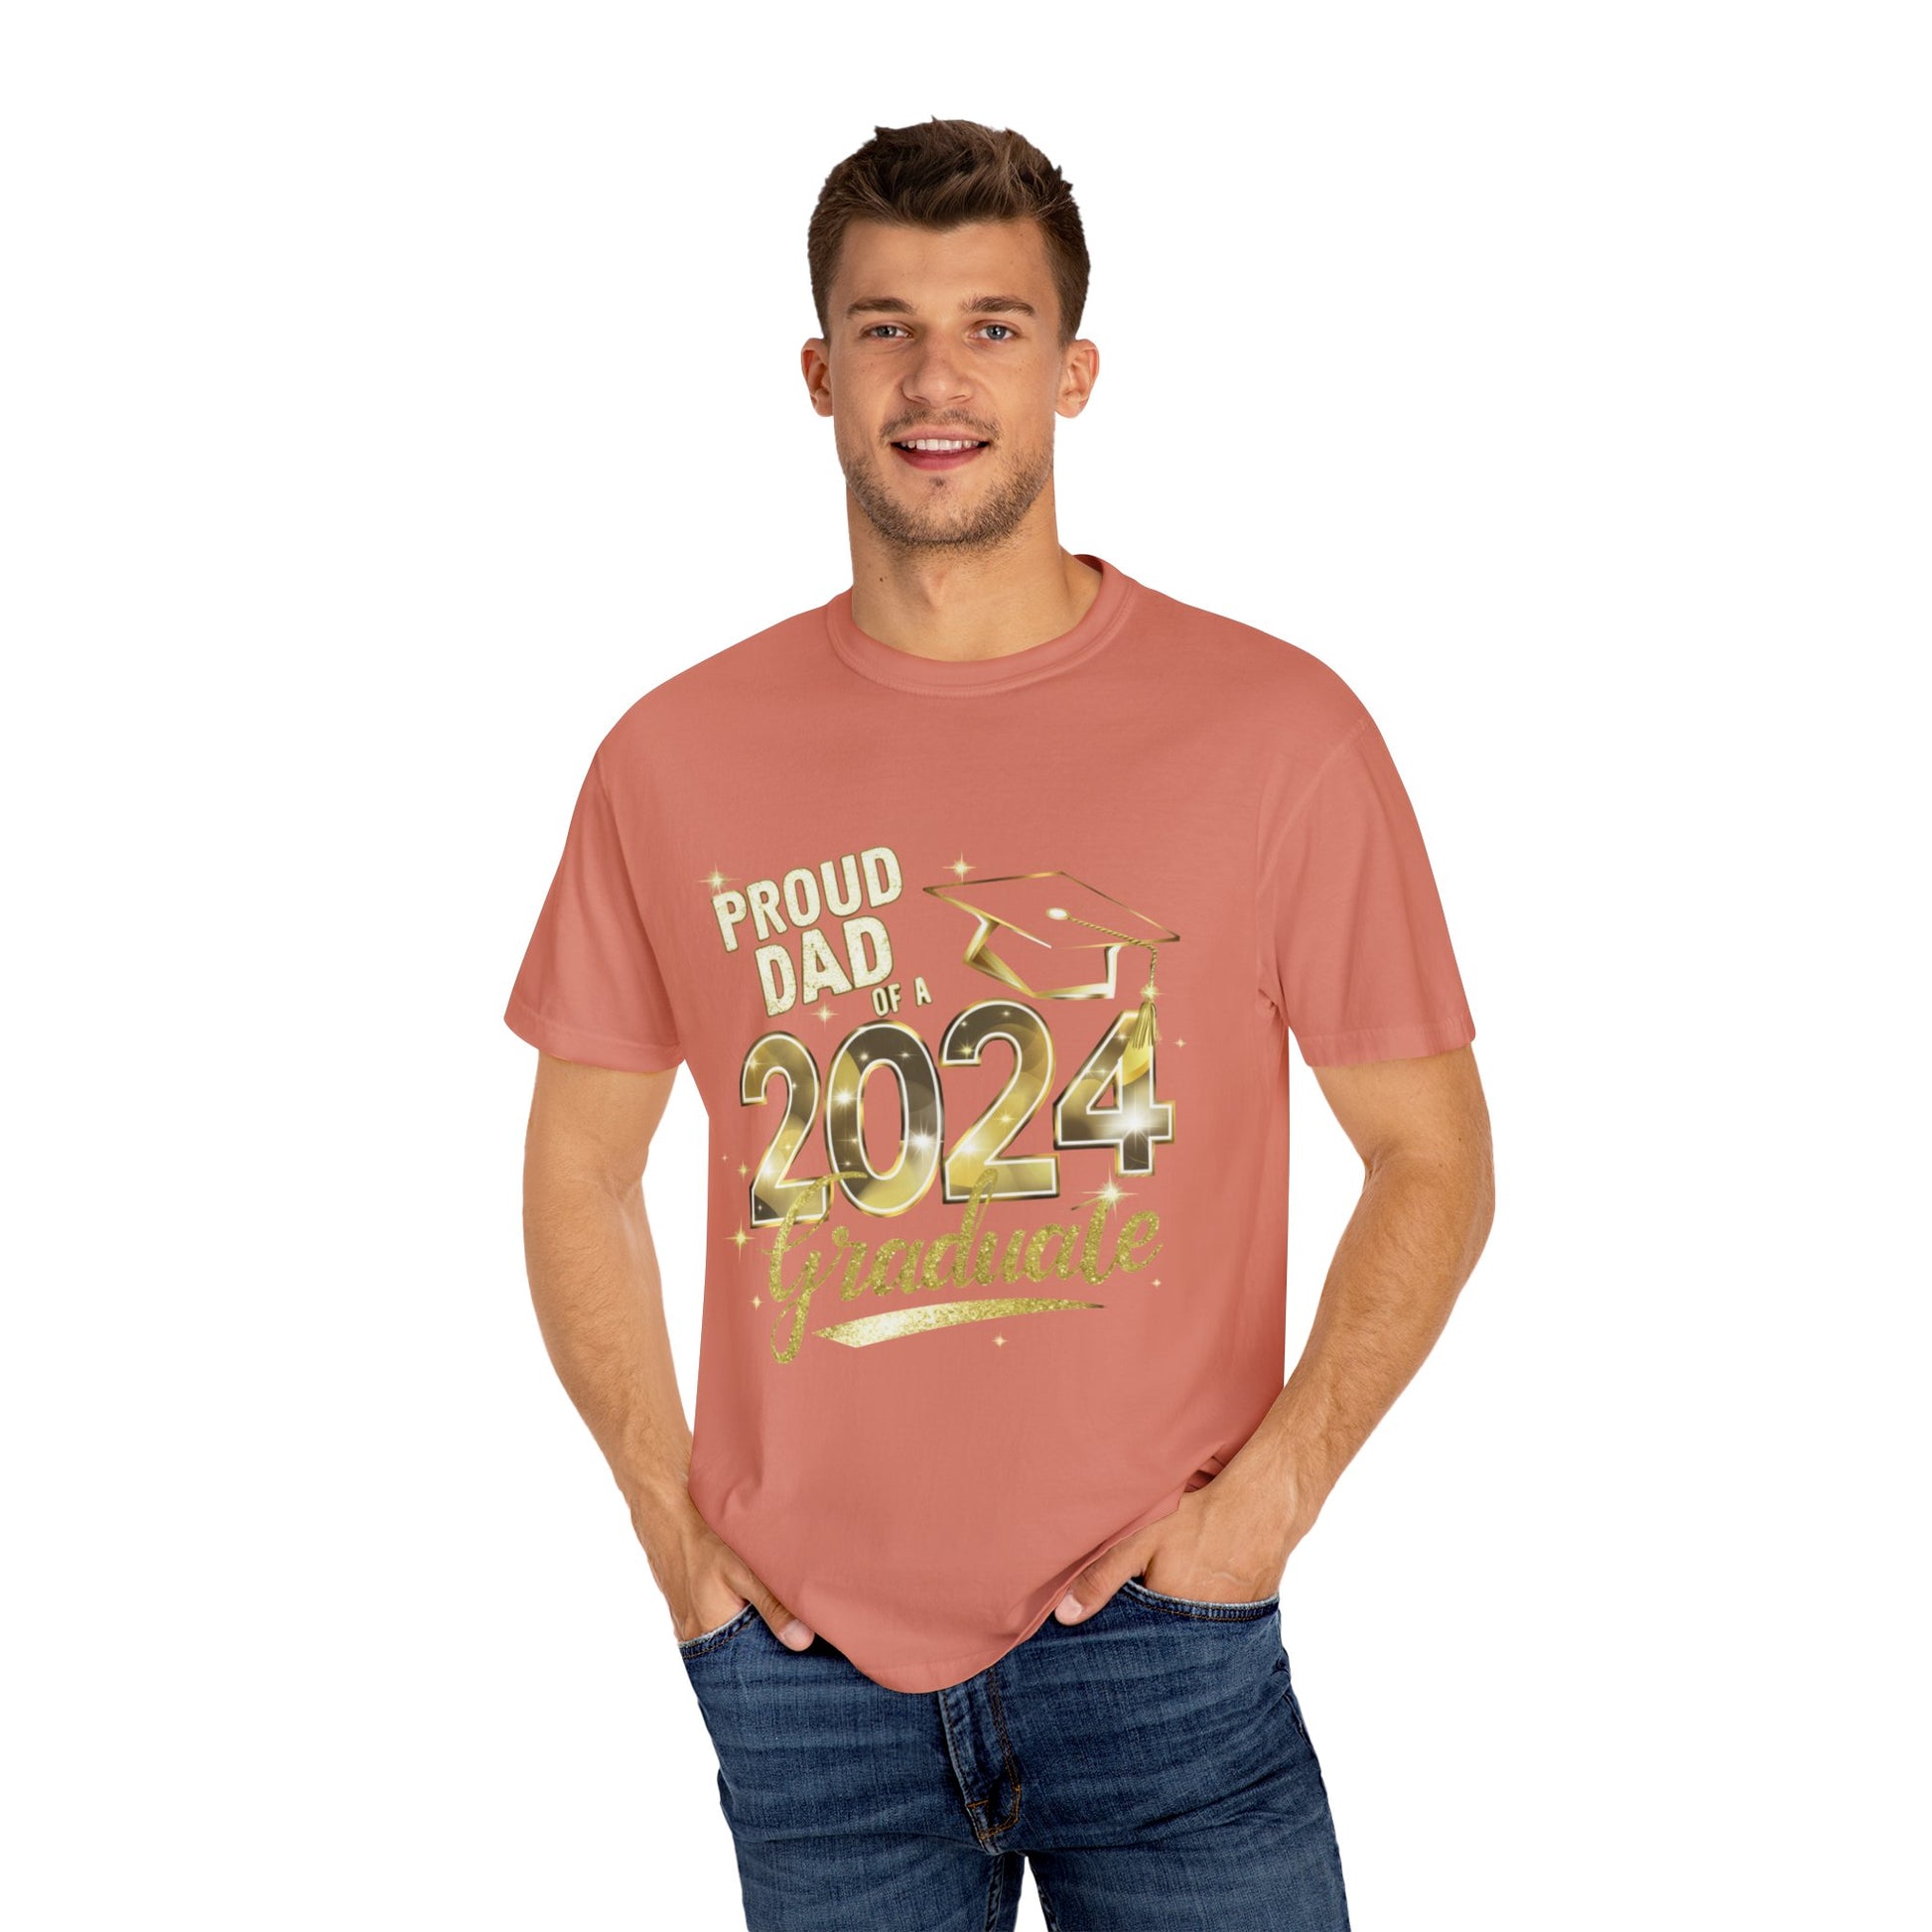 Proud of Dad 2024 Graduate Unisex Garment-dyed T-shirt Cotton Funny Humorous Graphic Soft Premium Unisex Men Women Terracotta T-shirt Birthday Gift-57